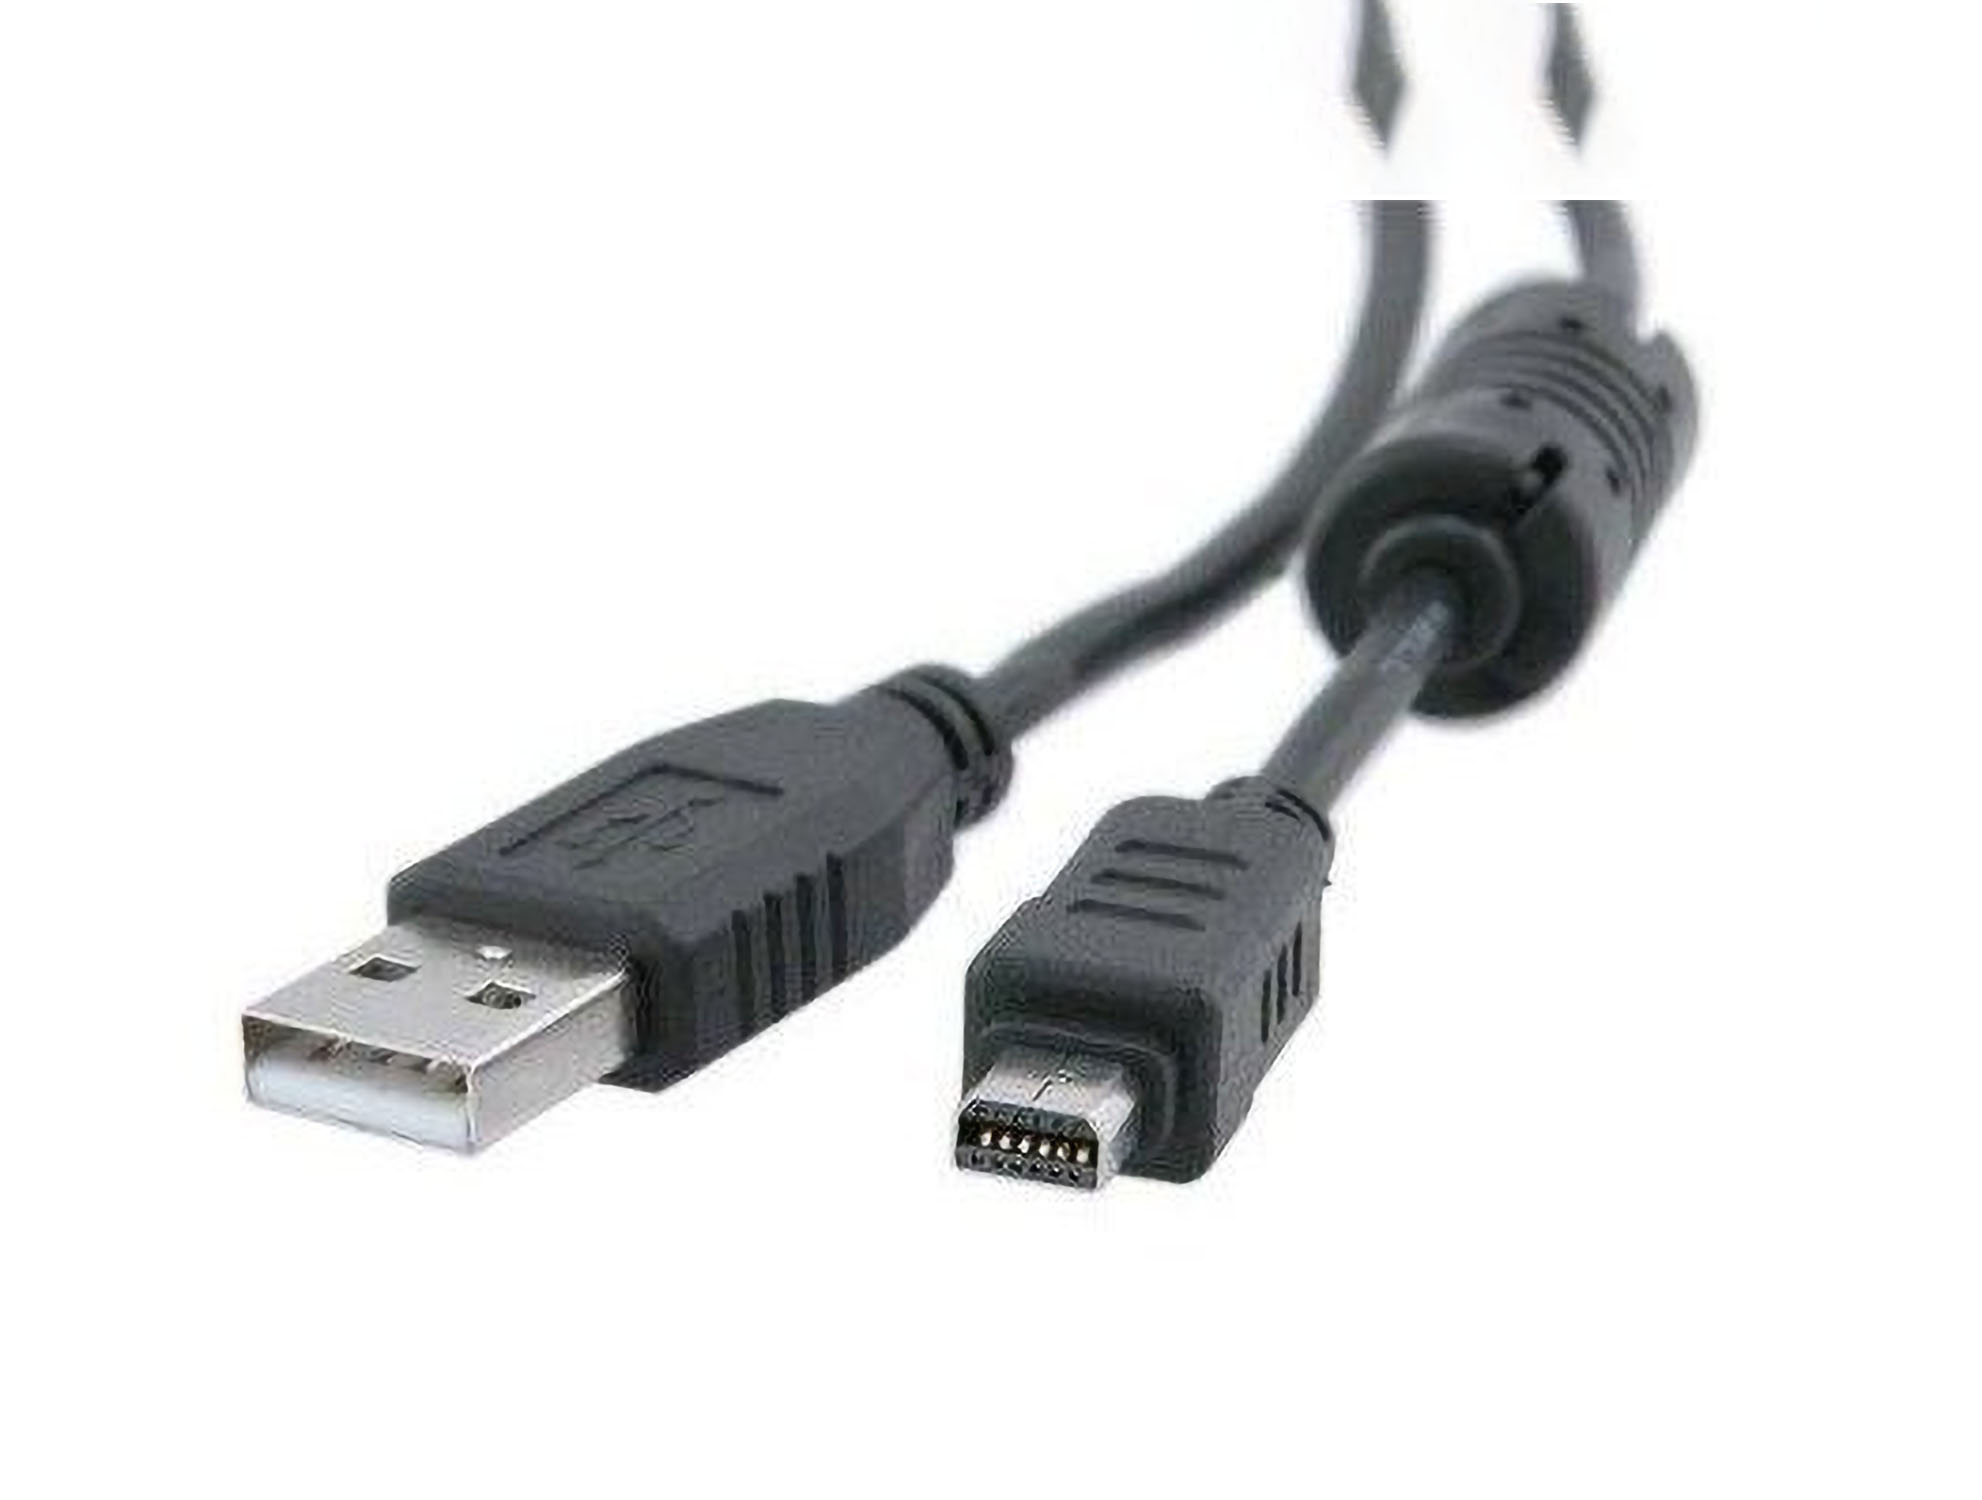 Mju USB-Datenkabel mit kompatibel Olympus MOBILOTEC Tough 8010 schwarz Olympus, Zubehör